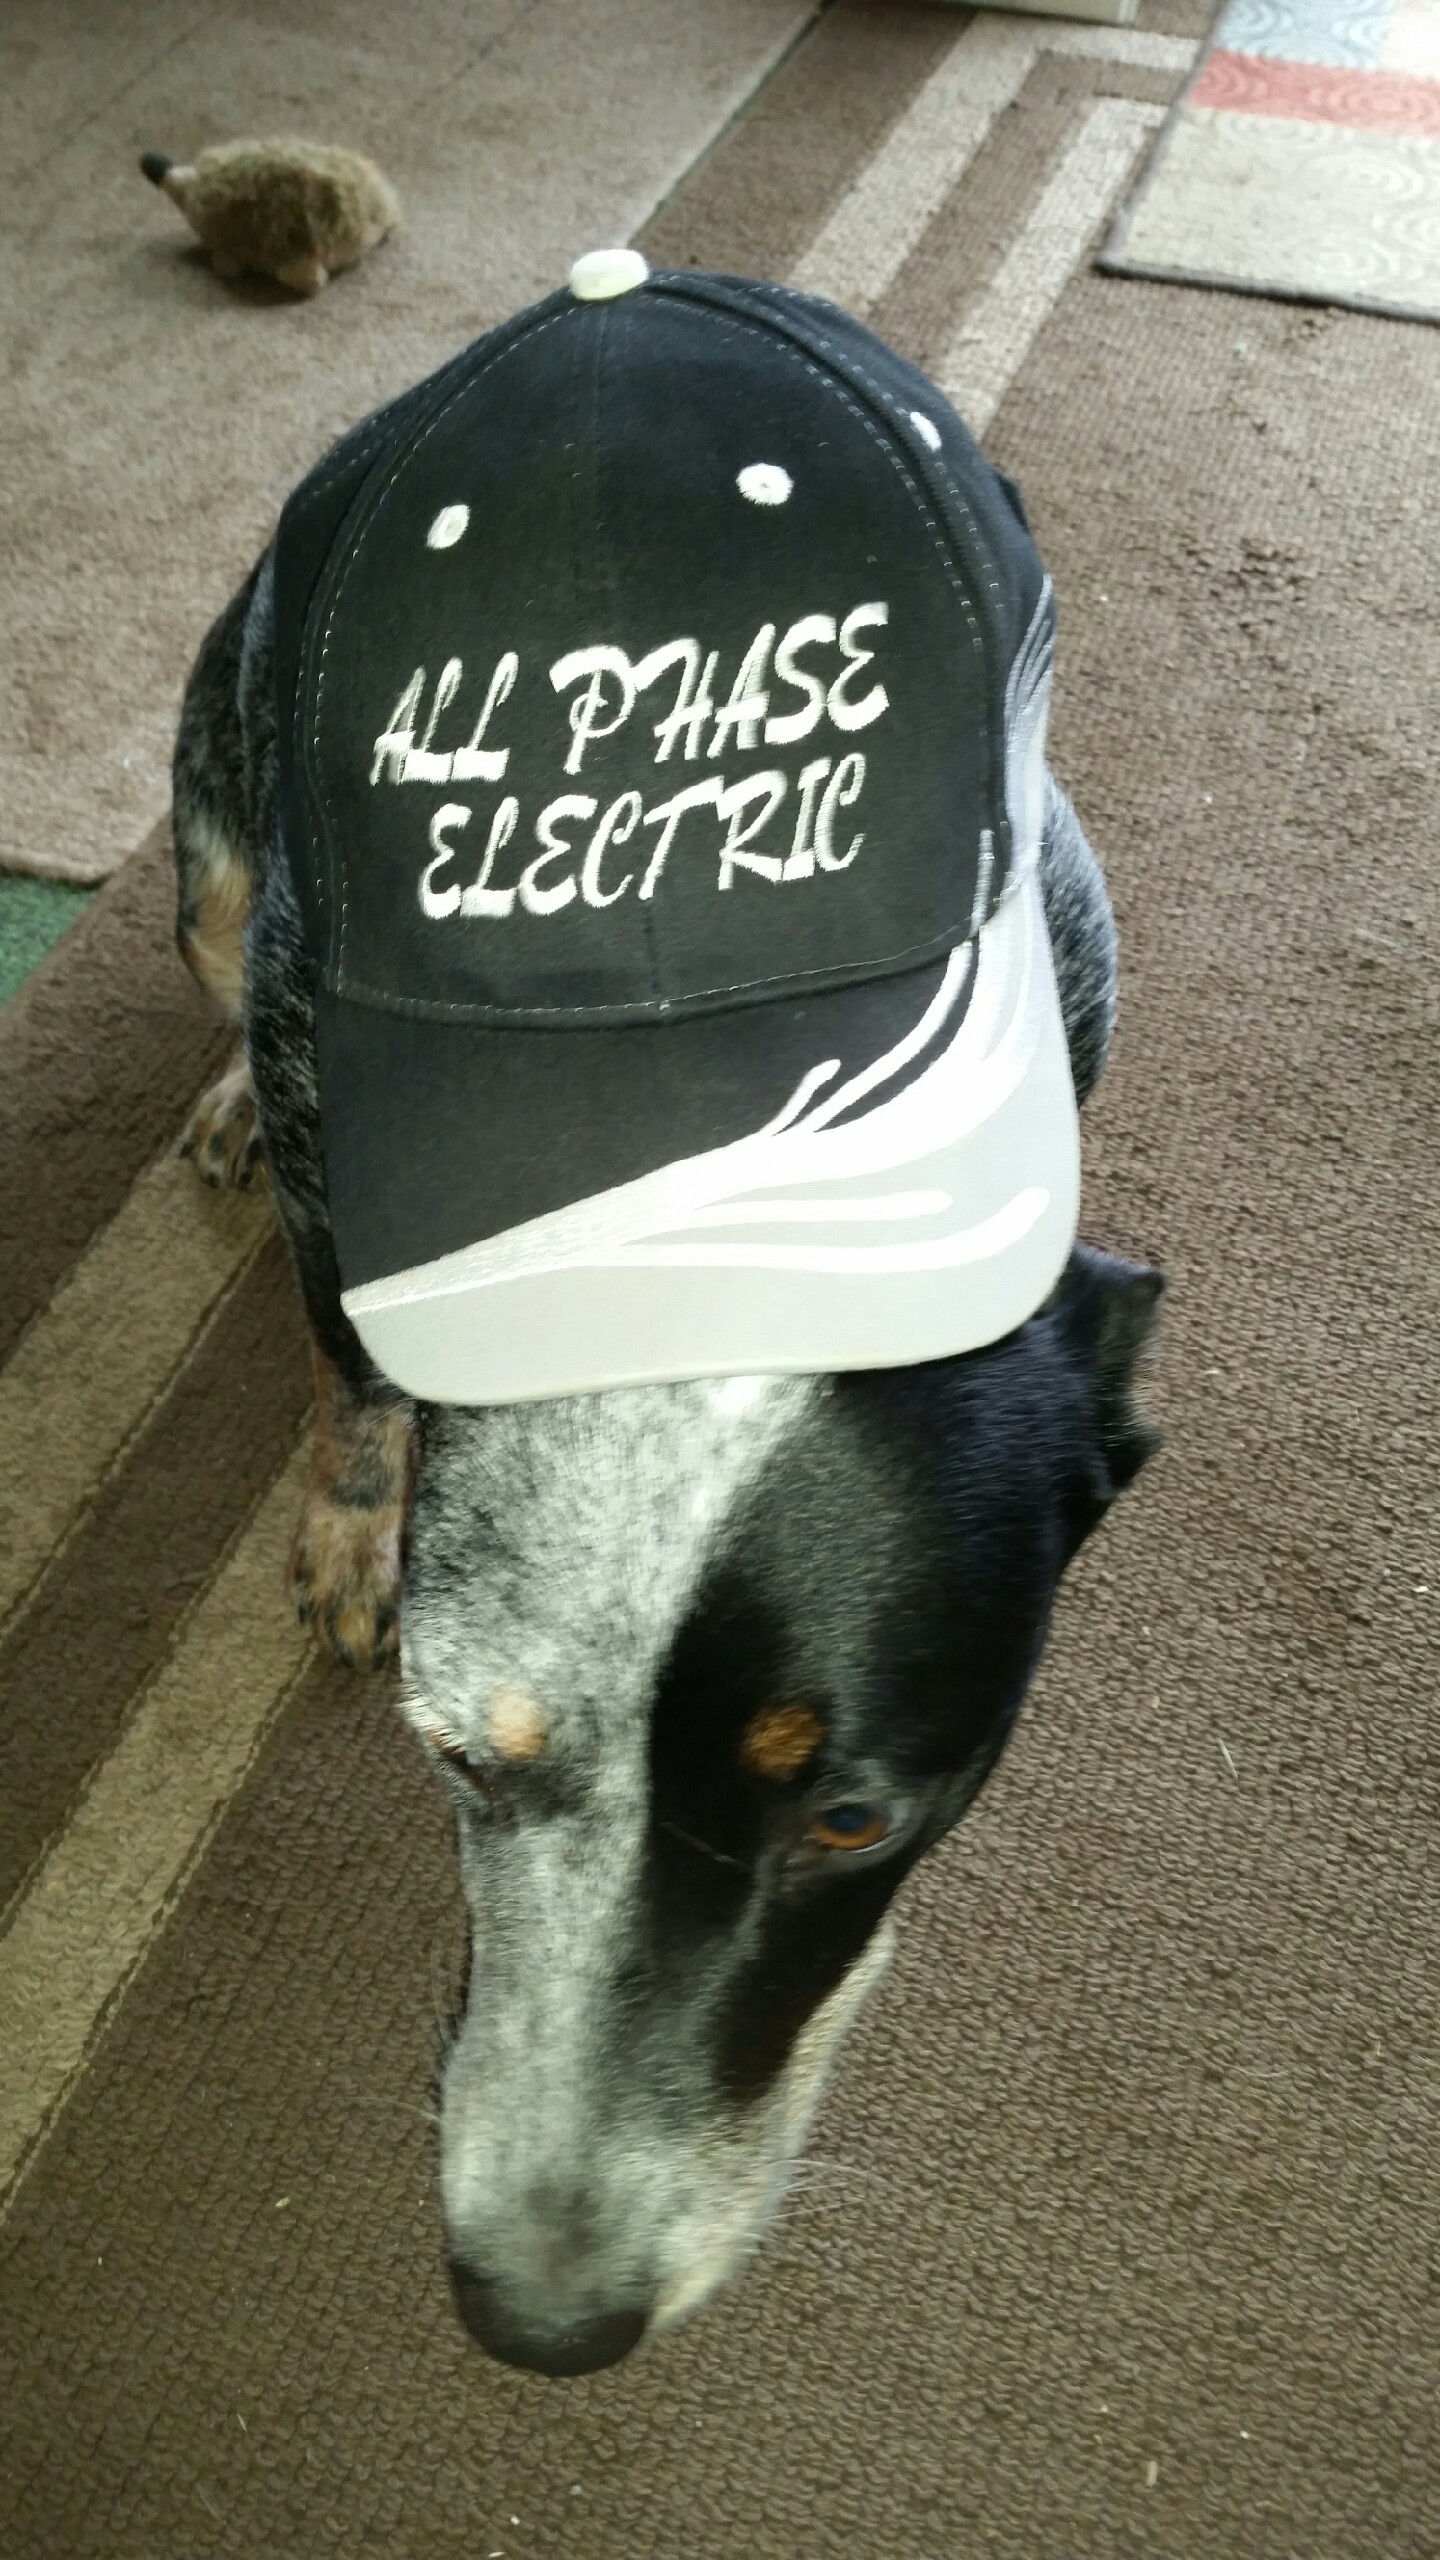 All Phase Electric, LLC - Man's Best Friend